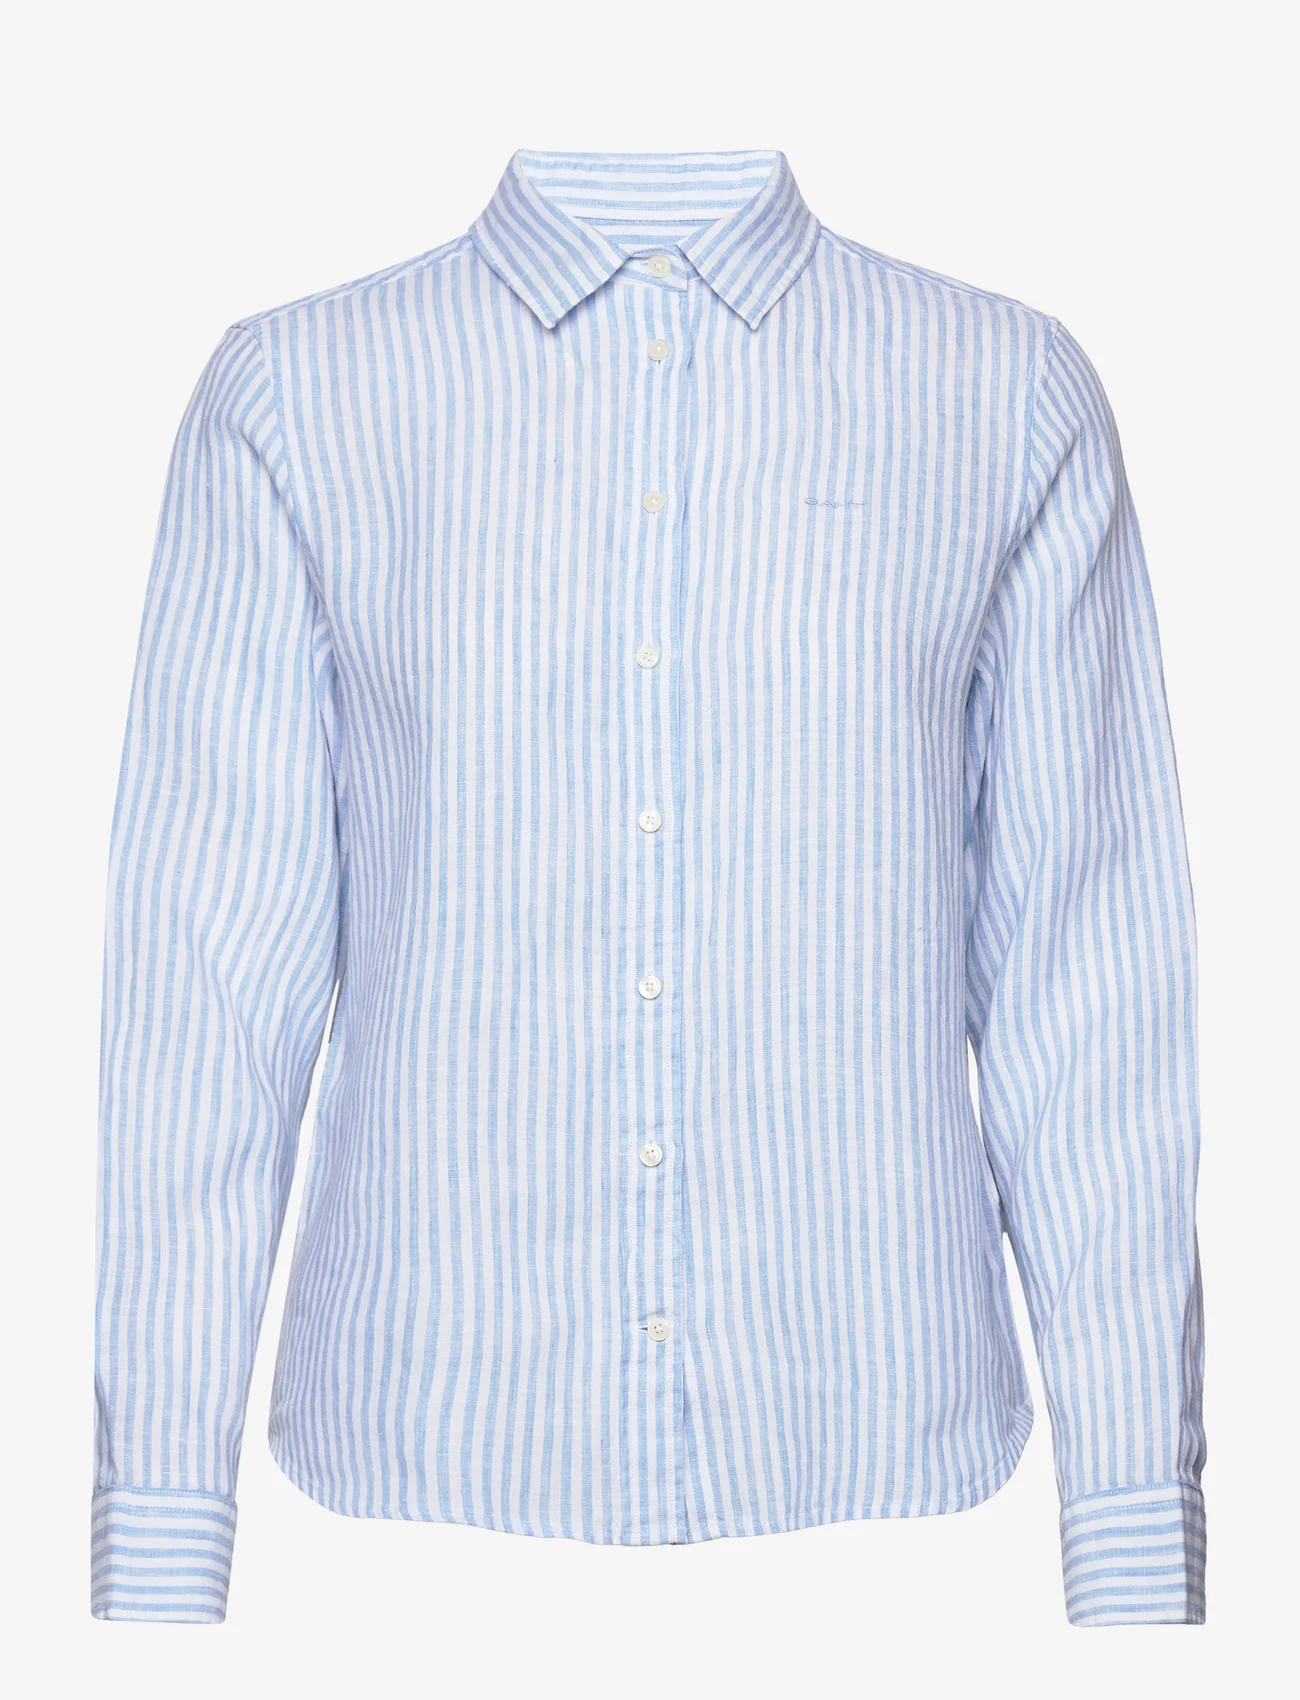 GANT - REG LINEN STRIPE SHIRT - pitkähihaiset paidat - gentle blue - 0